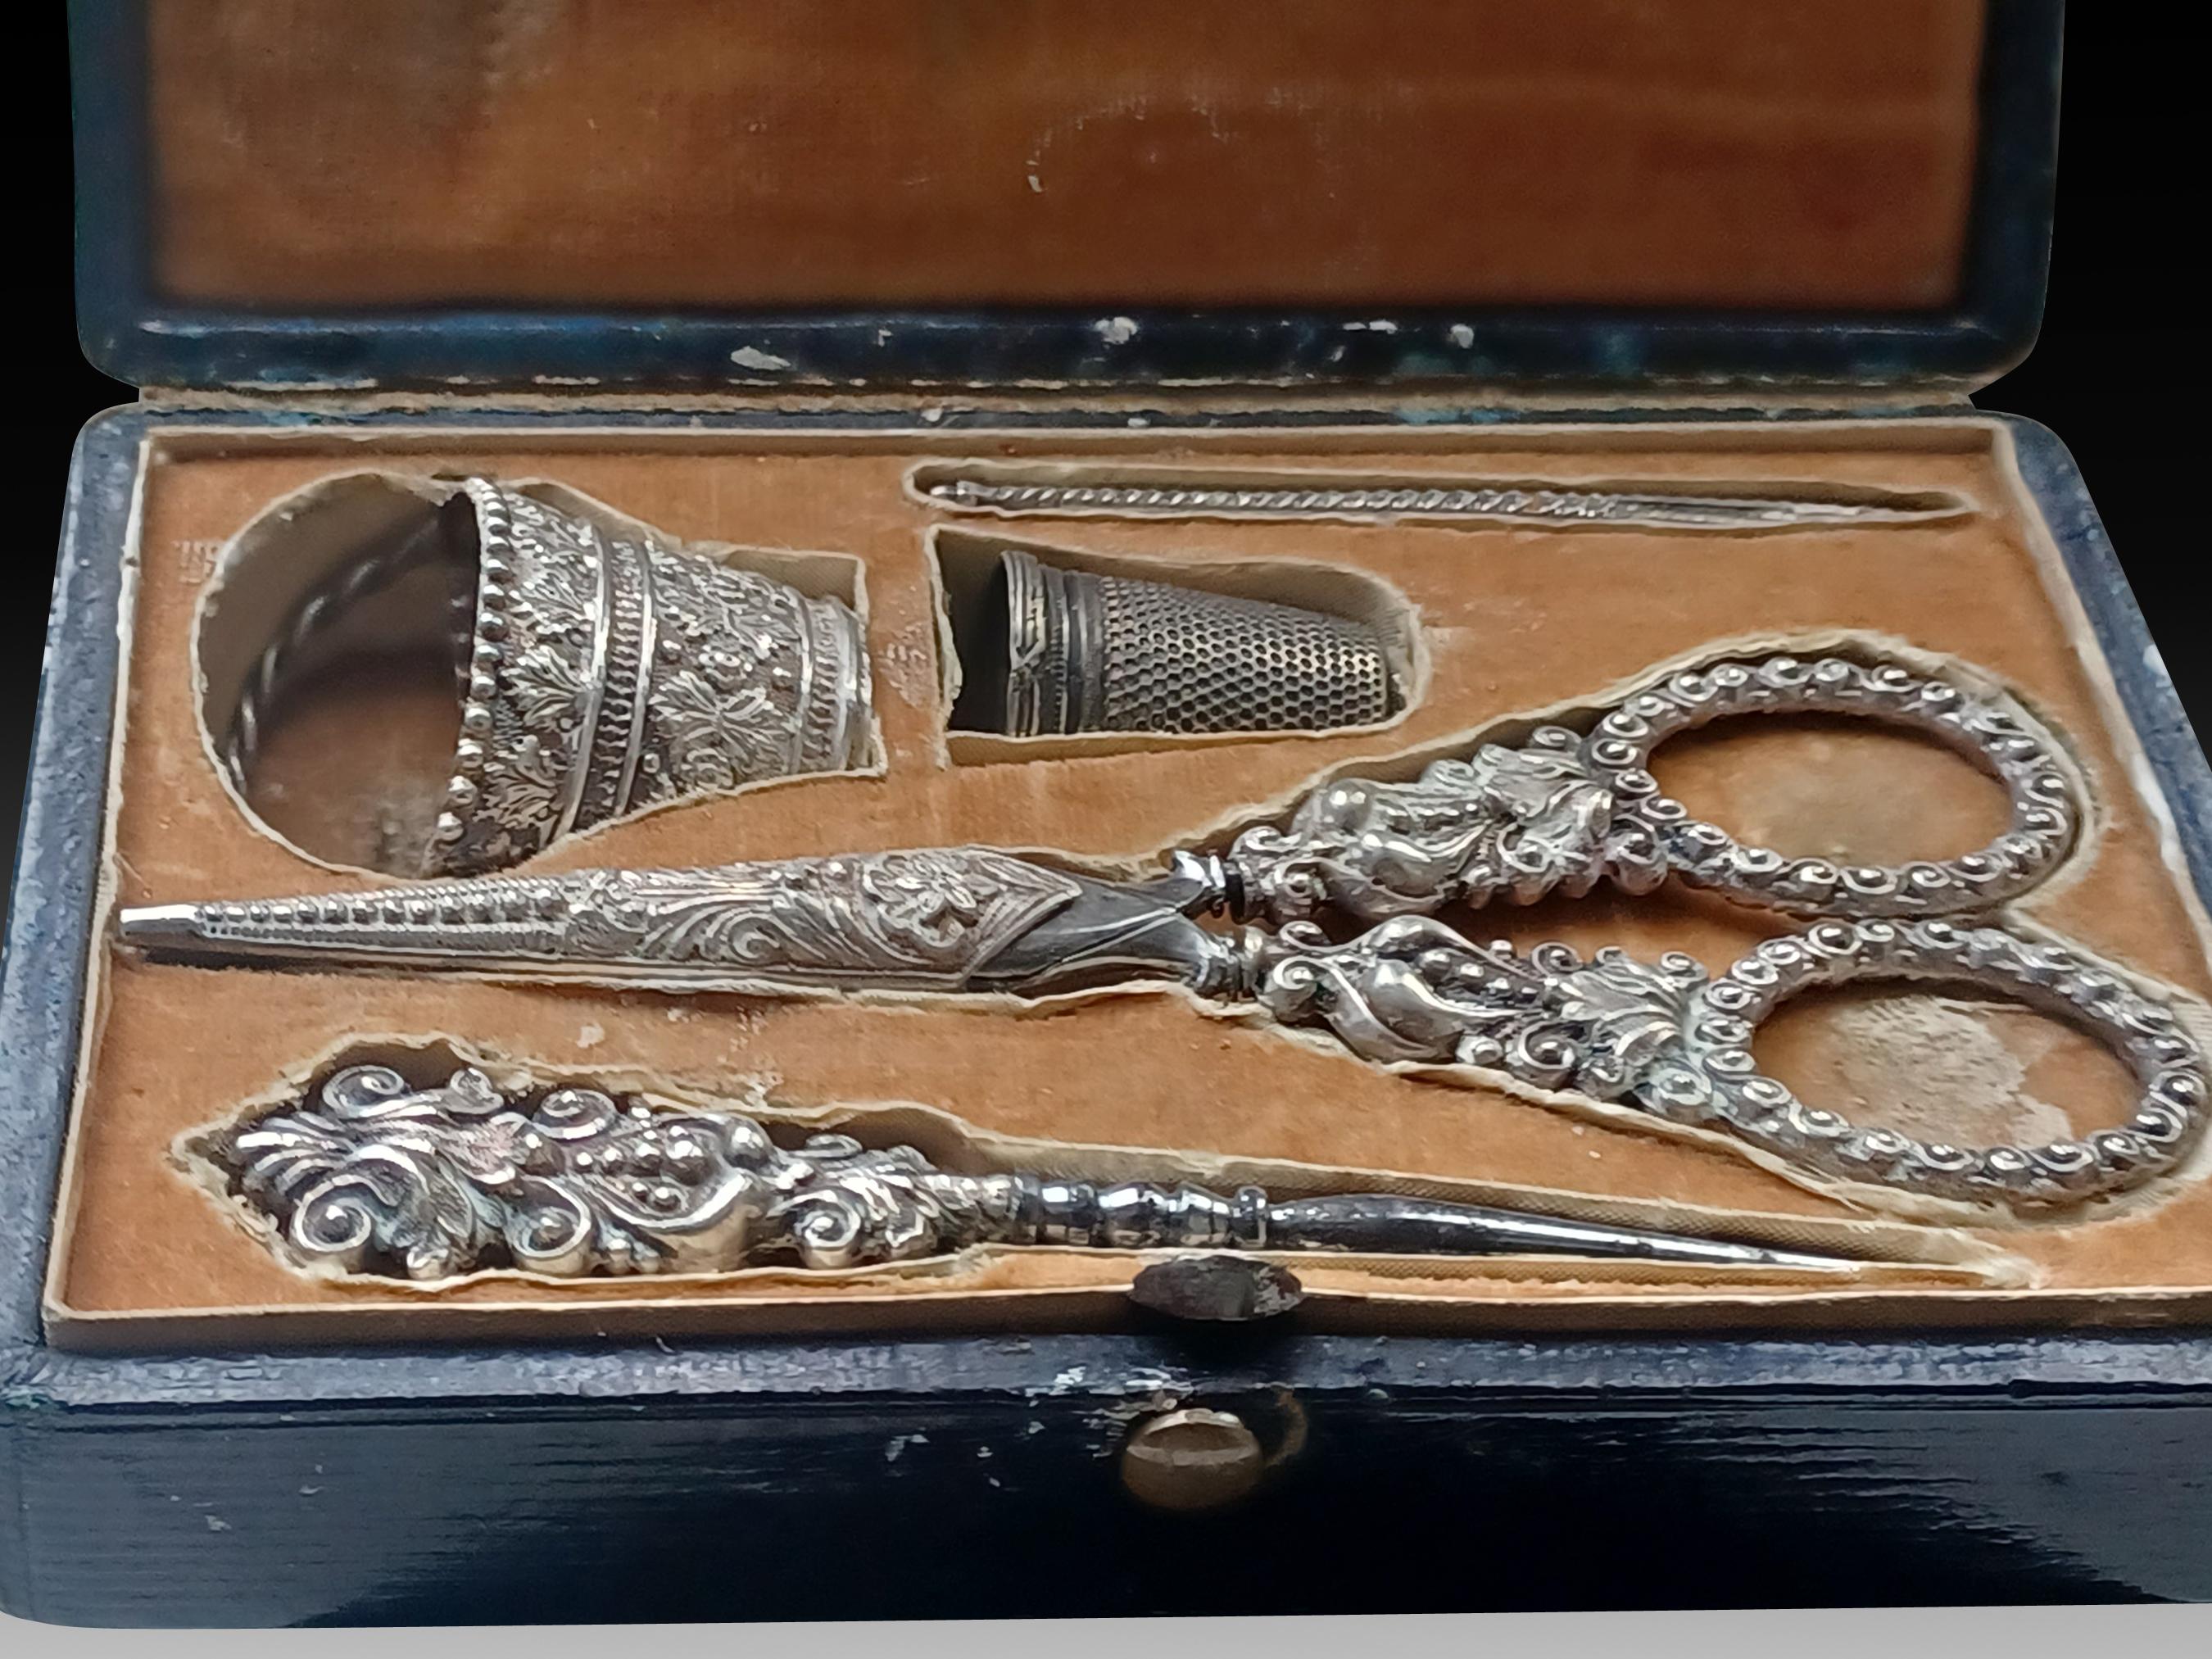 Rare Antique George IV Lady’s Sewing Necessaire with Original Case, est. 1825 For Sale 11